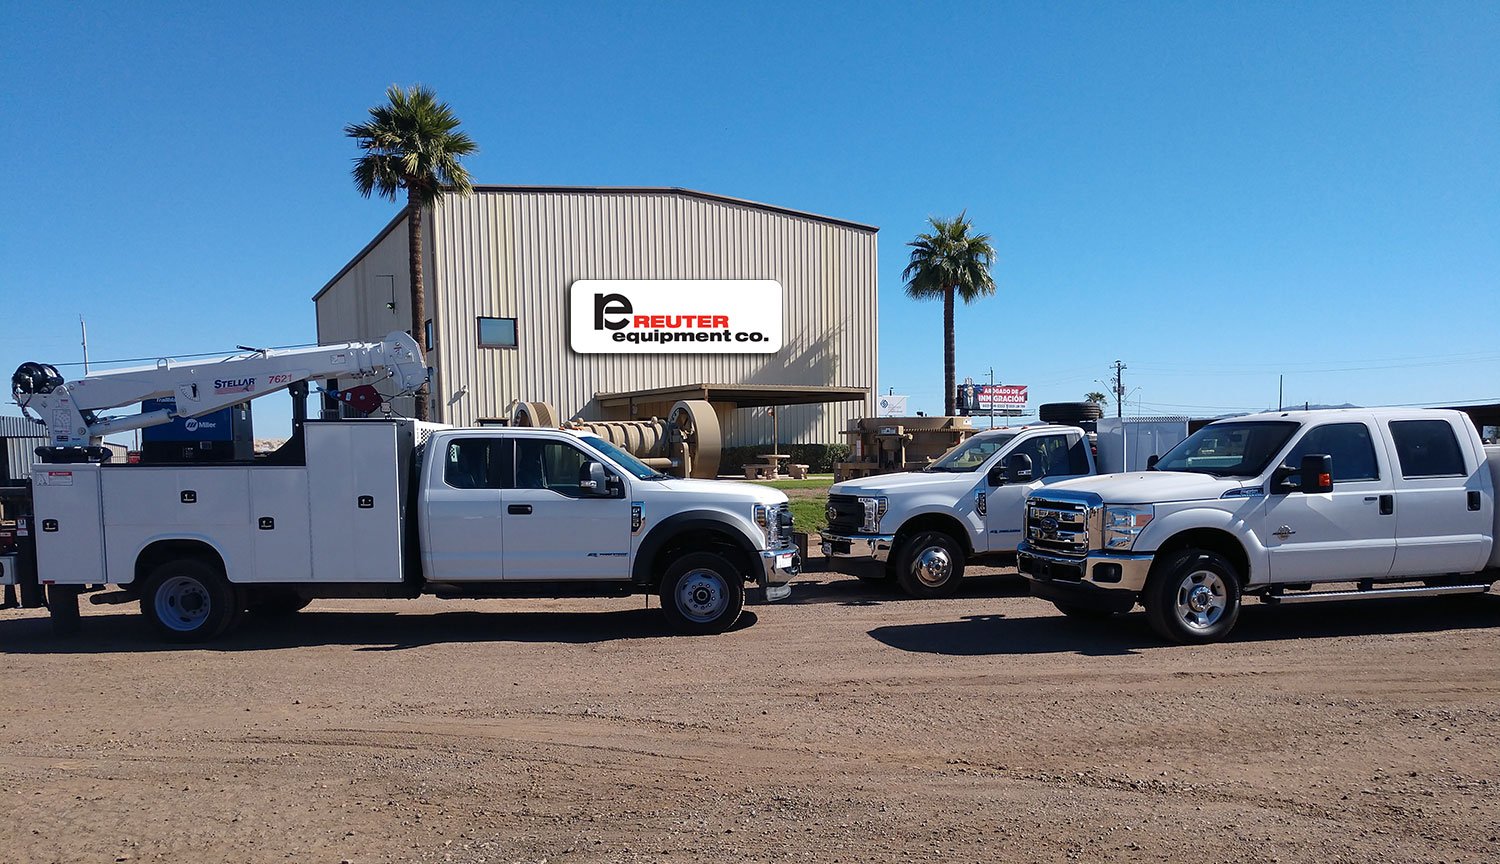 Reuter Equipment Service Trucks